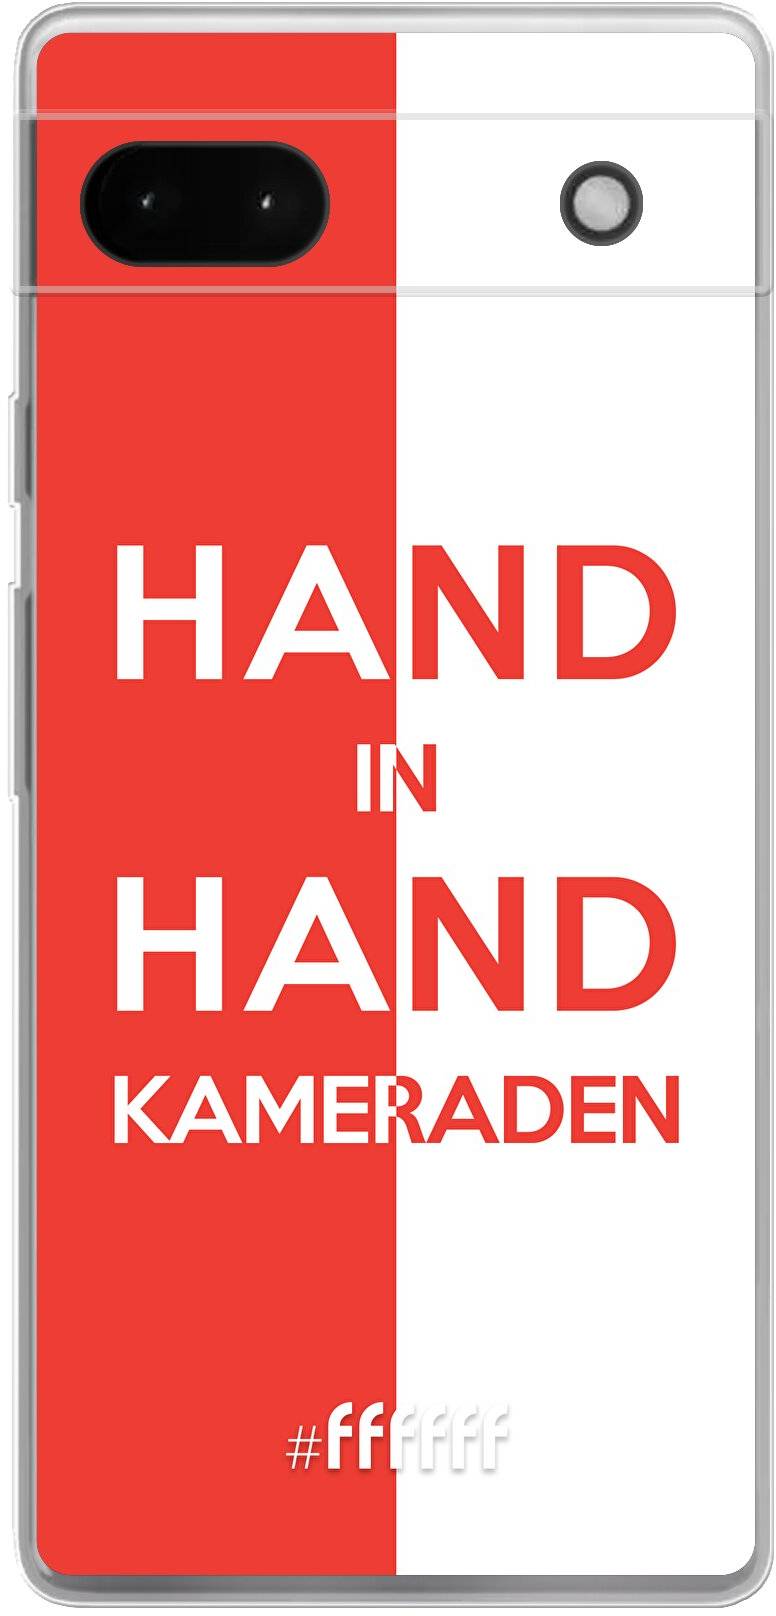 Feyenoord - Hand in hand, kameraden Pixel 6A